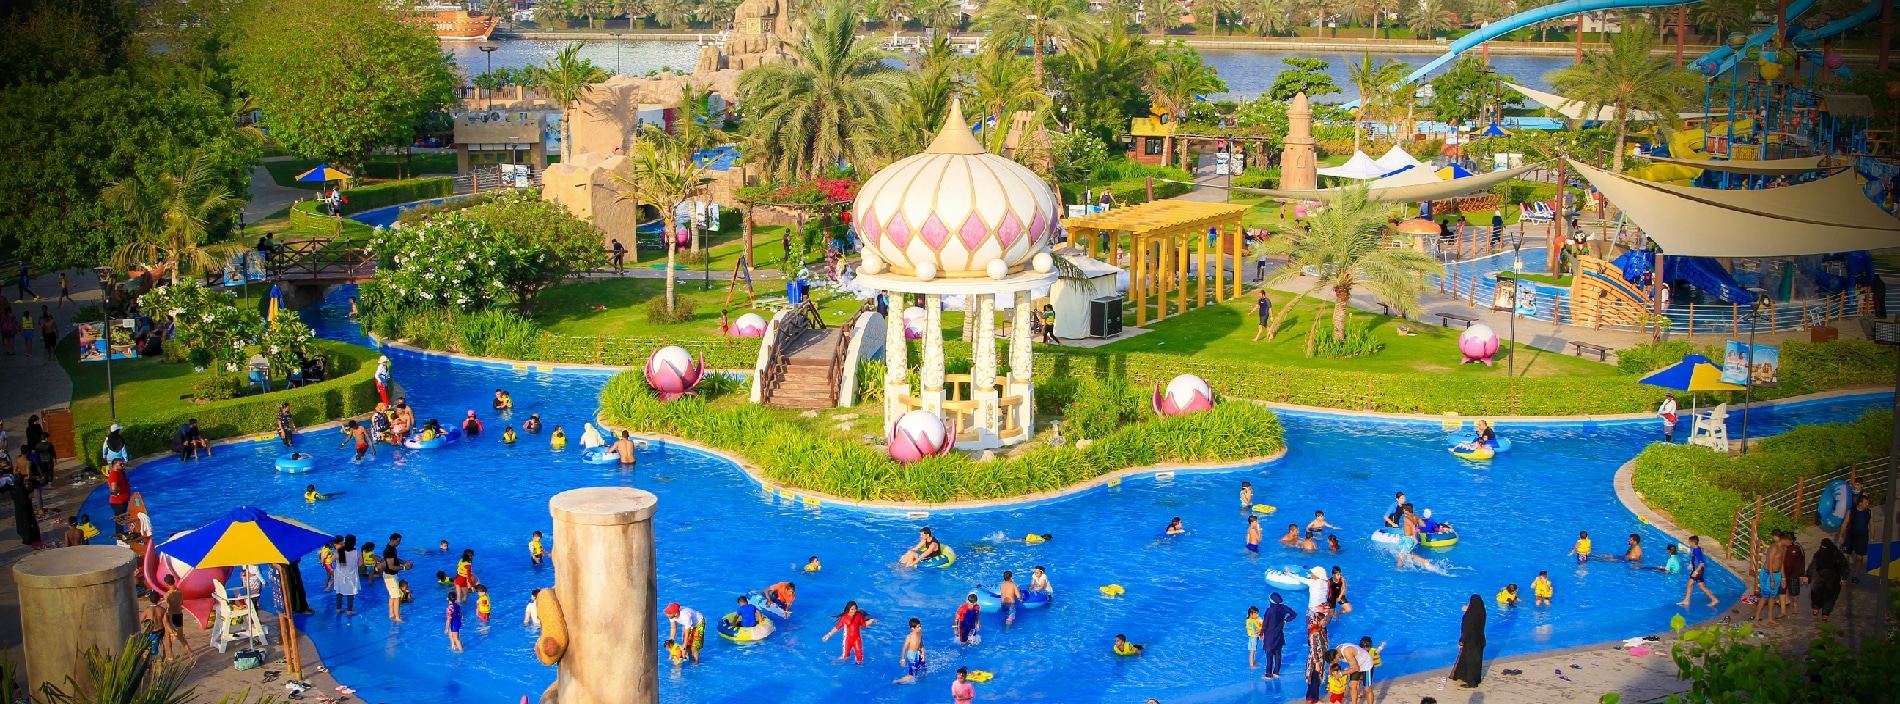 بلیط های پارک آبی پرلز پادشاهی - Al Montazah Park Sharjah